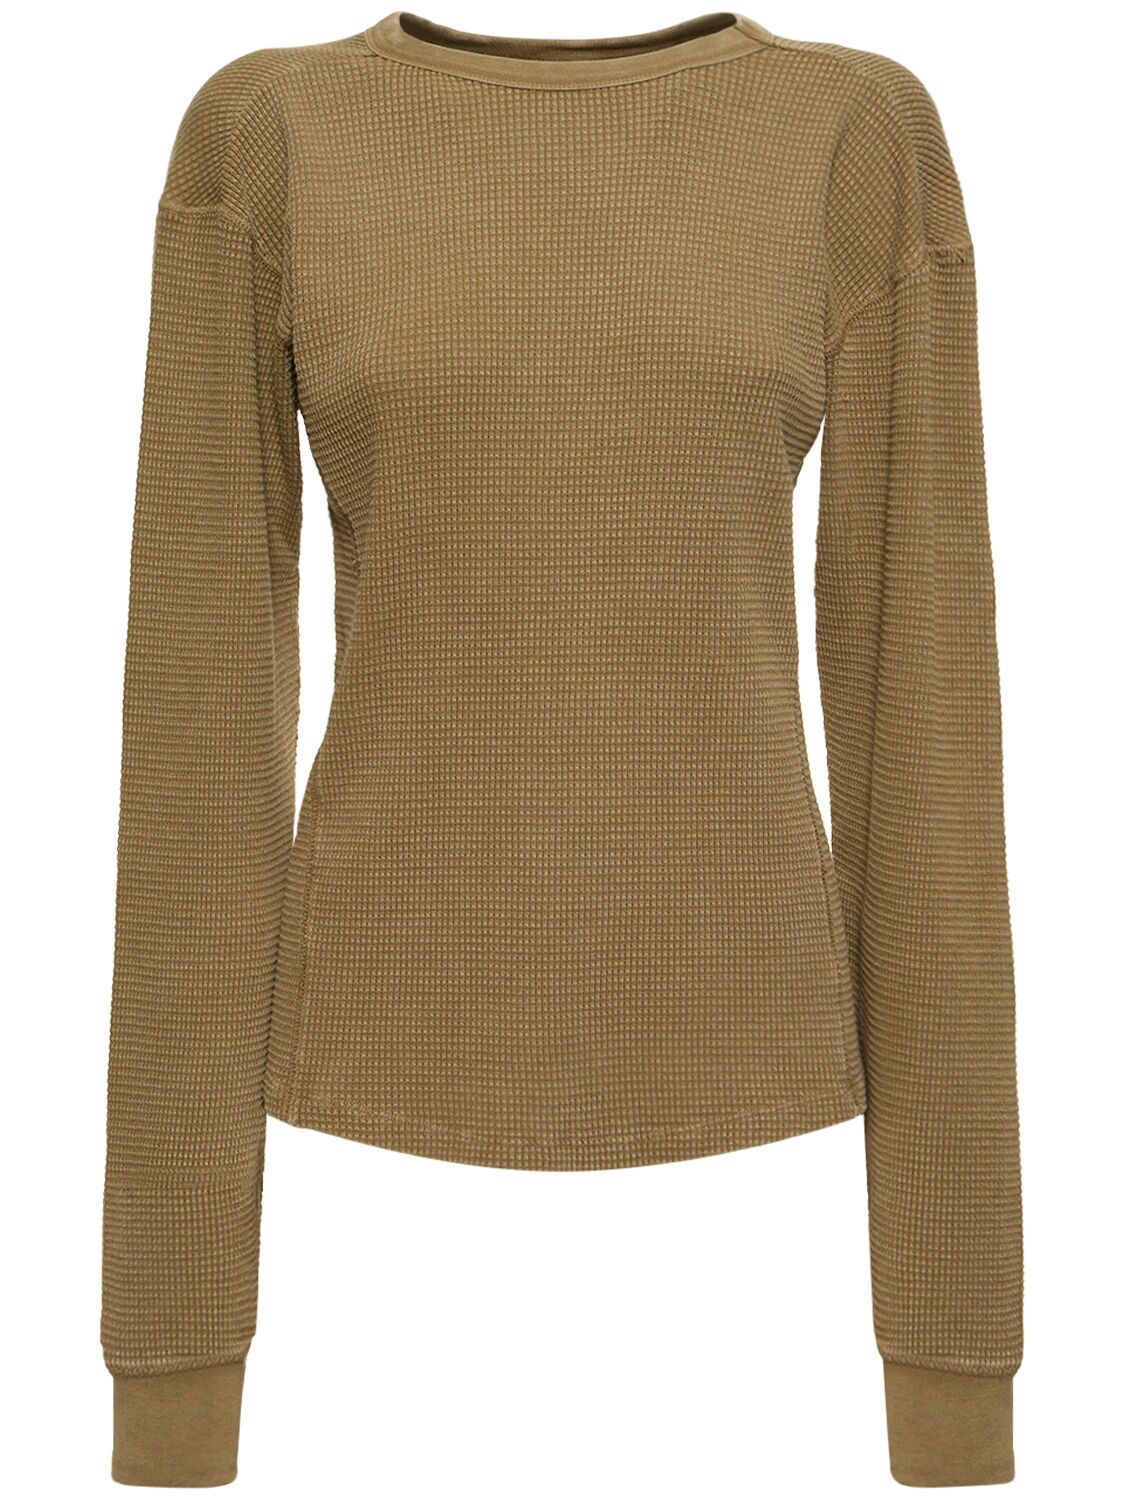 Image of Cork Thermal Long Sleeve T-shirt